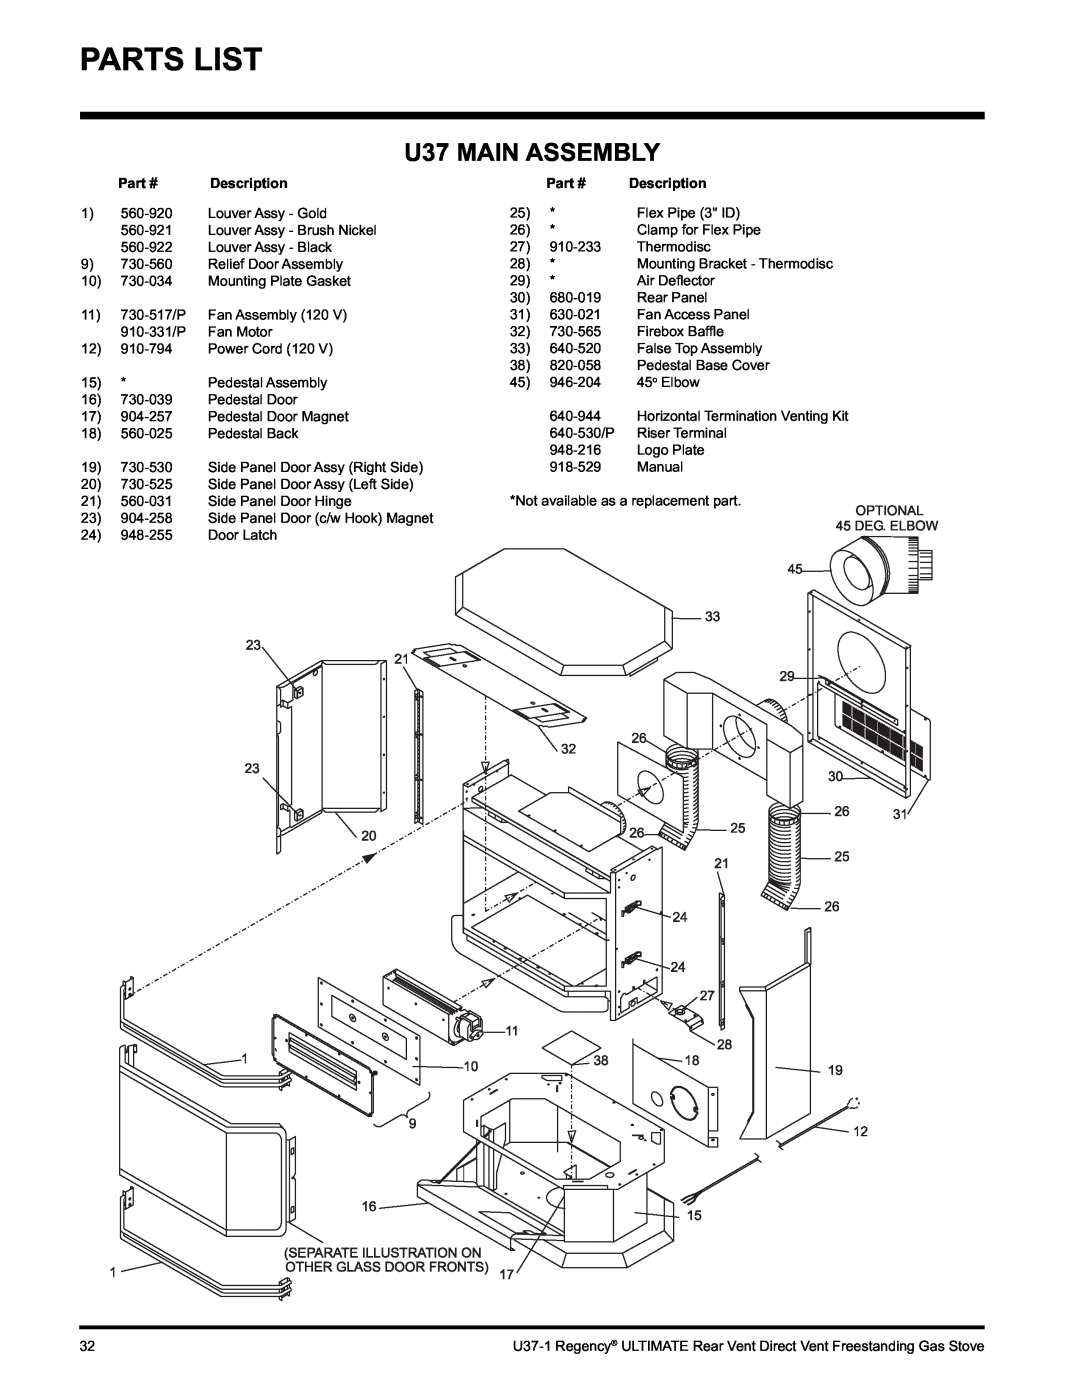 Regency U37-LP1, U37-NG1 installation manual Parts List, U37 MAIN ASSEMBLY 